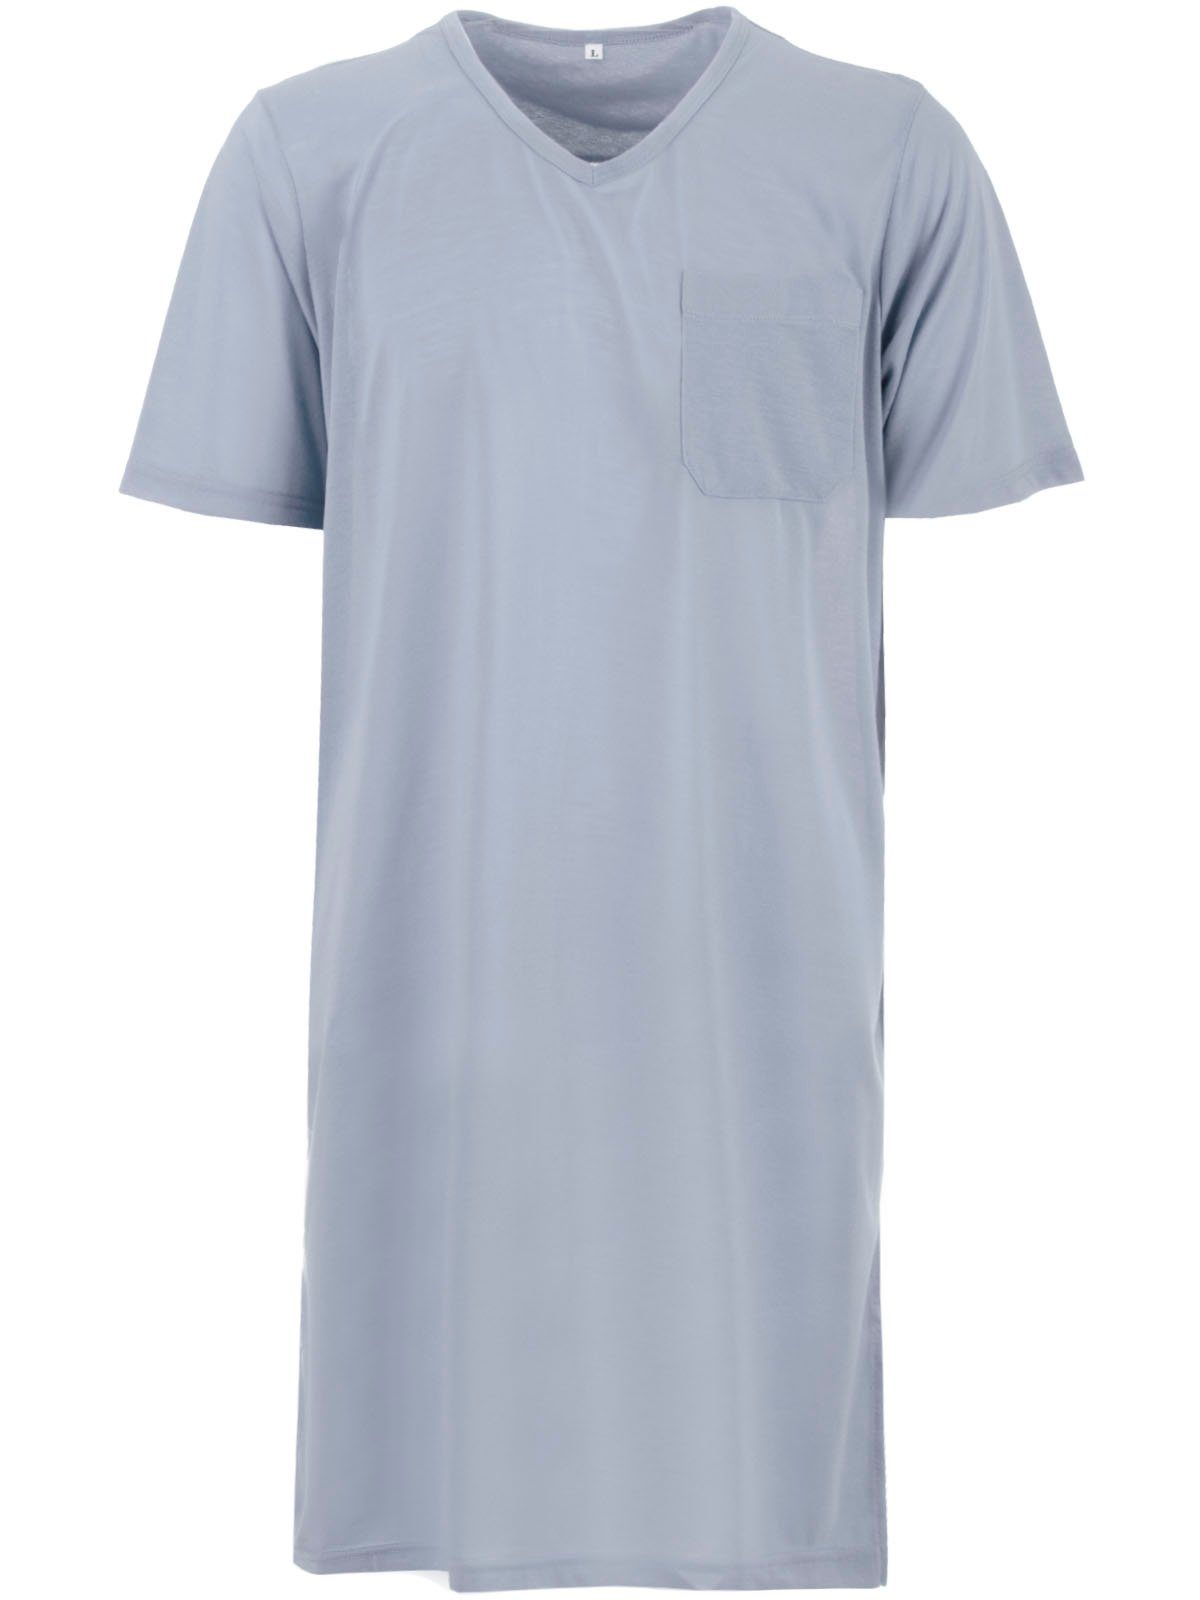 Lucky Nachthemd Nachthemd Kurzarm - Uni V-Ausschnitt grau